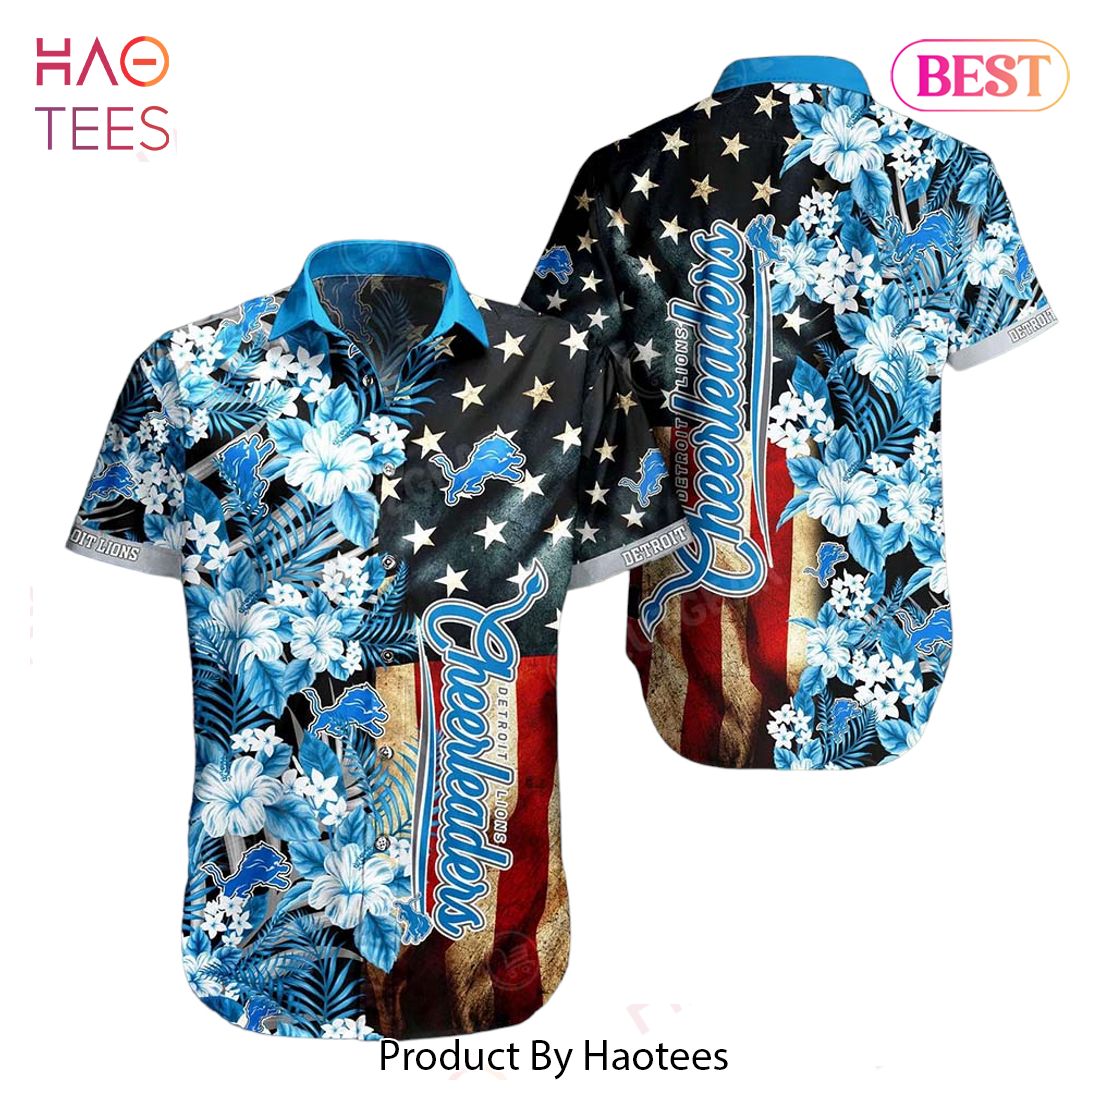 HOT TREND Detroit Lions NFL Graphic US Flag Flower Hawaiian Shirt New Trends Summer Gift Ever Fans